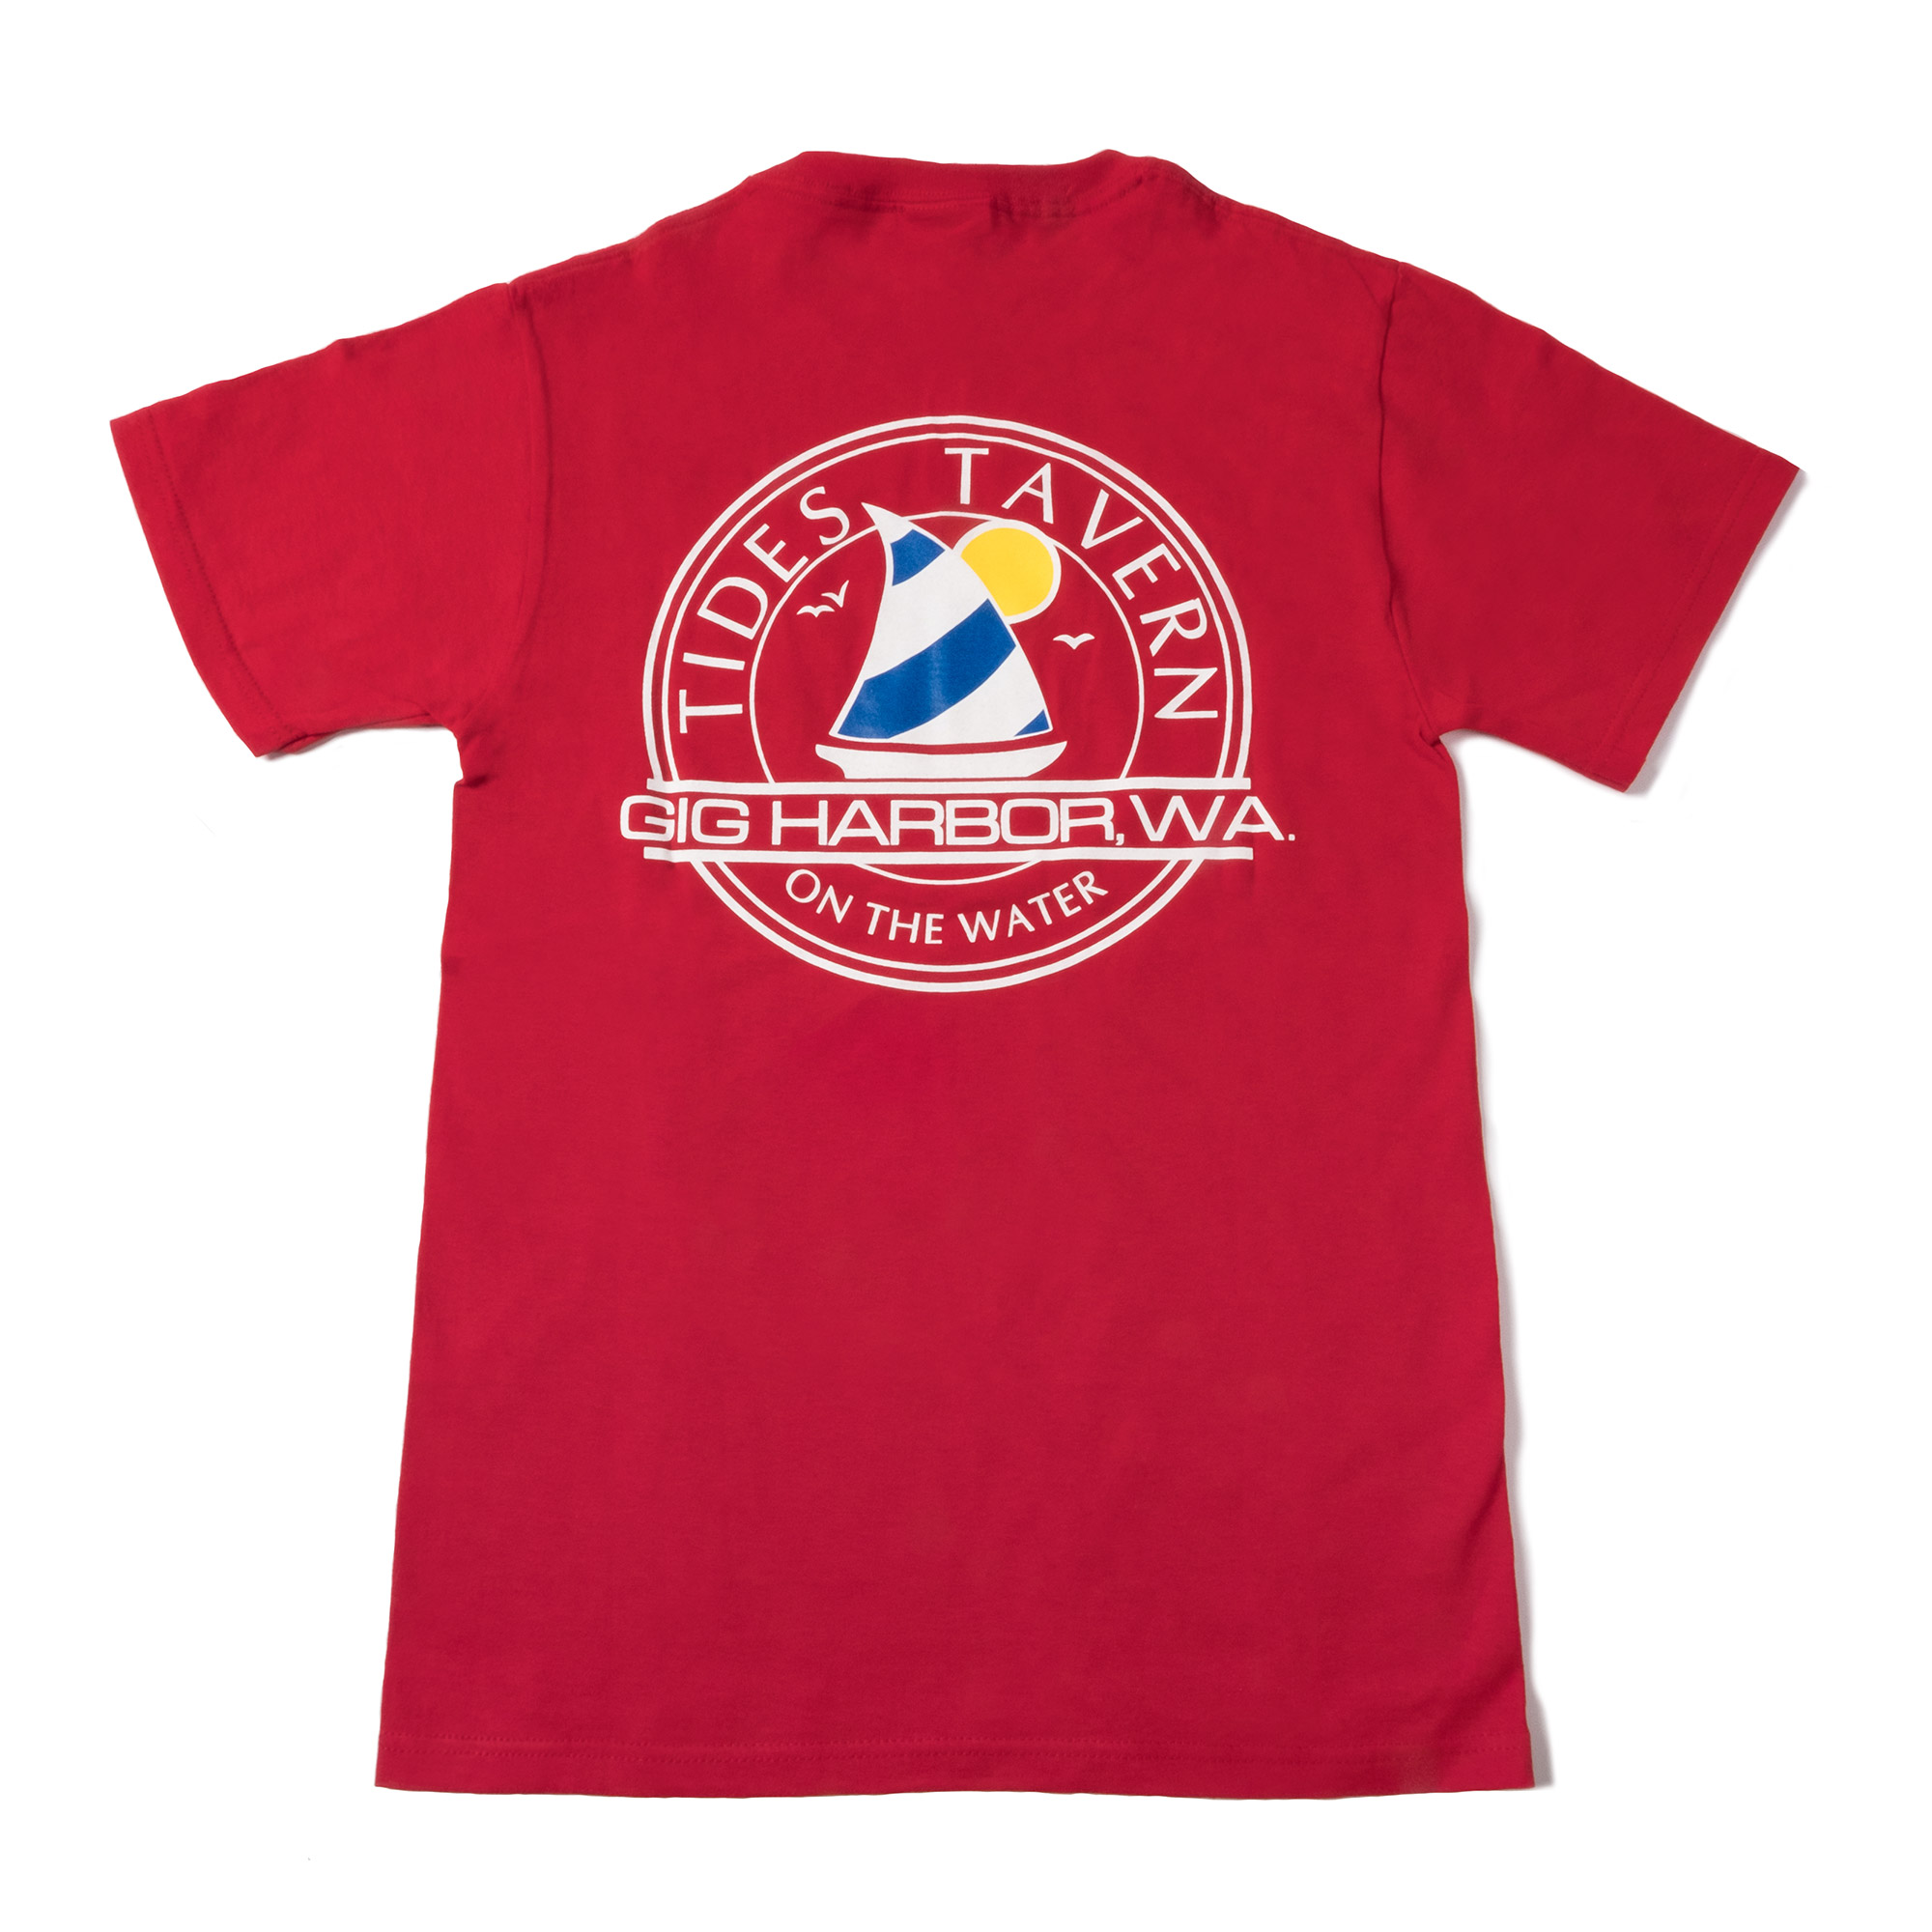 Tides Tavern Sailboat Logo T-Shirt - Red (Front and Back)